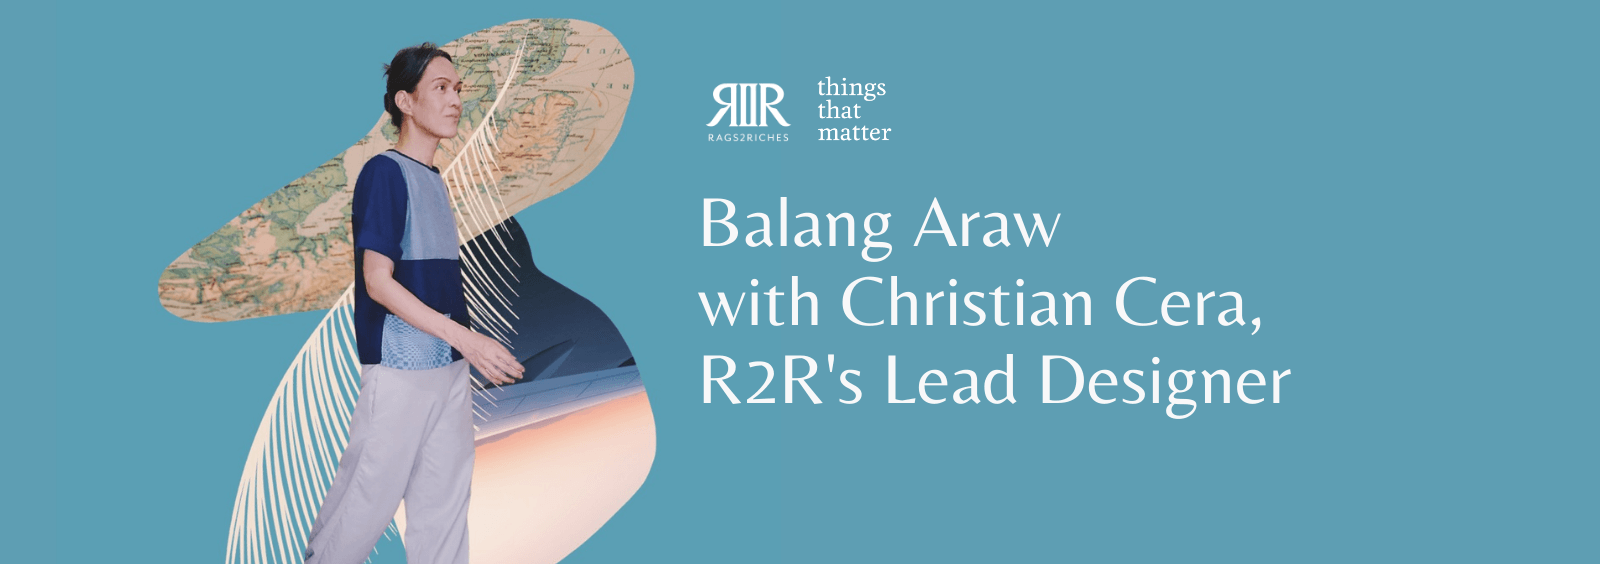 Balang Araw with Christian Cera, R2R's Lead Designer